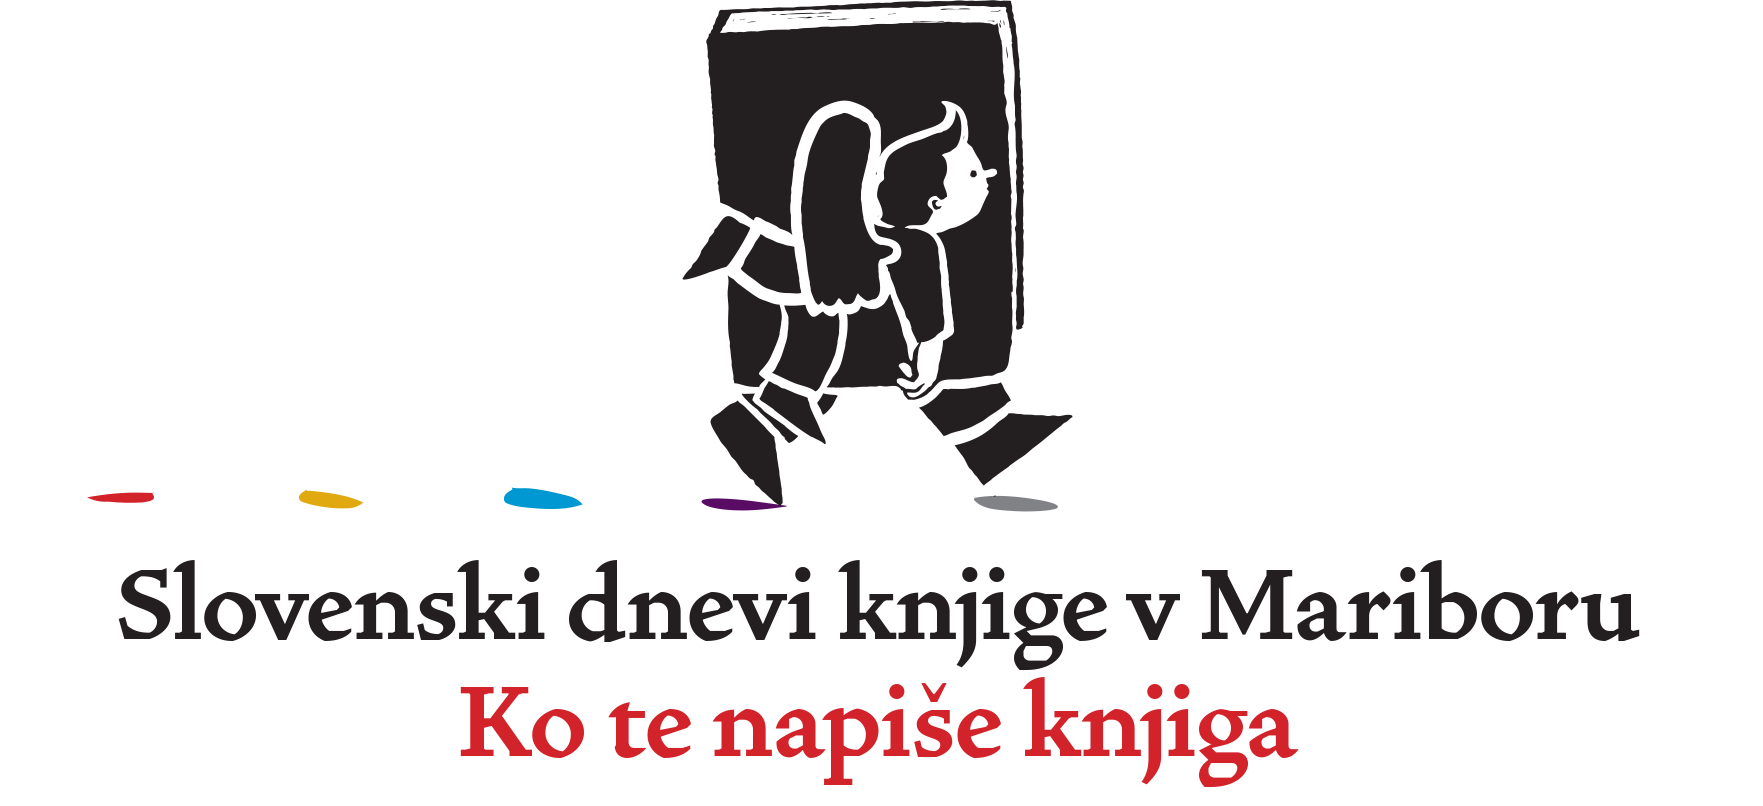 Dnevi_knjige_logo.png